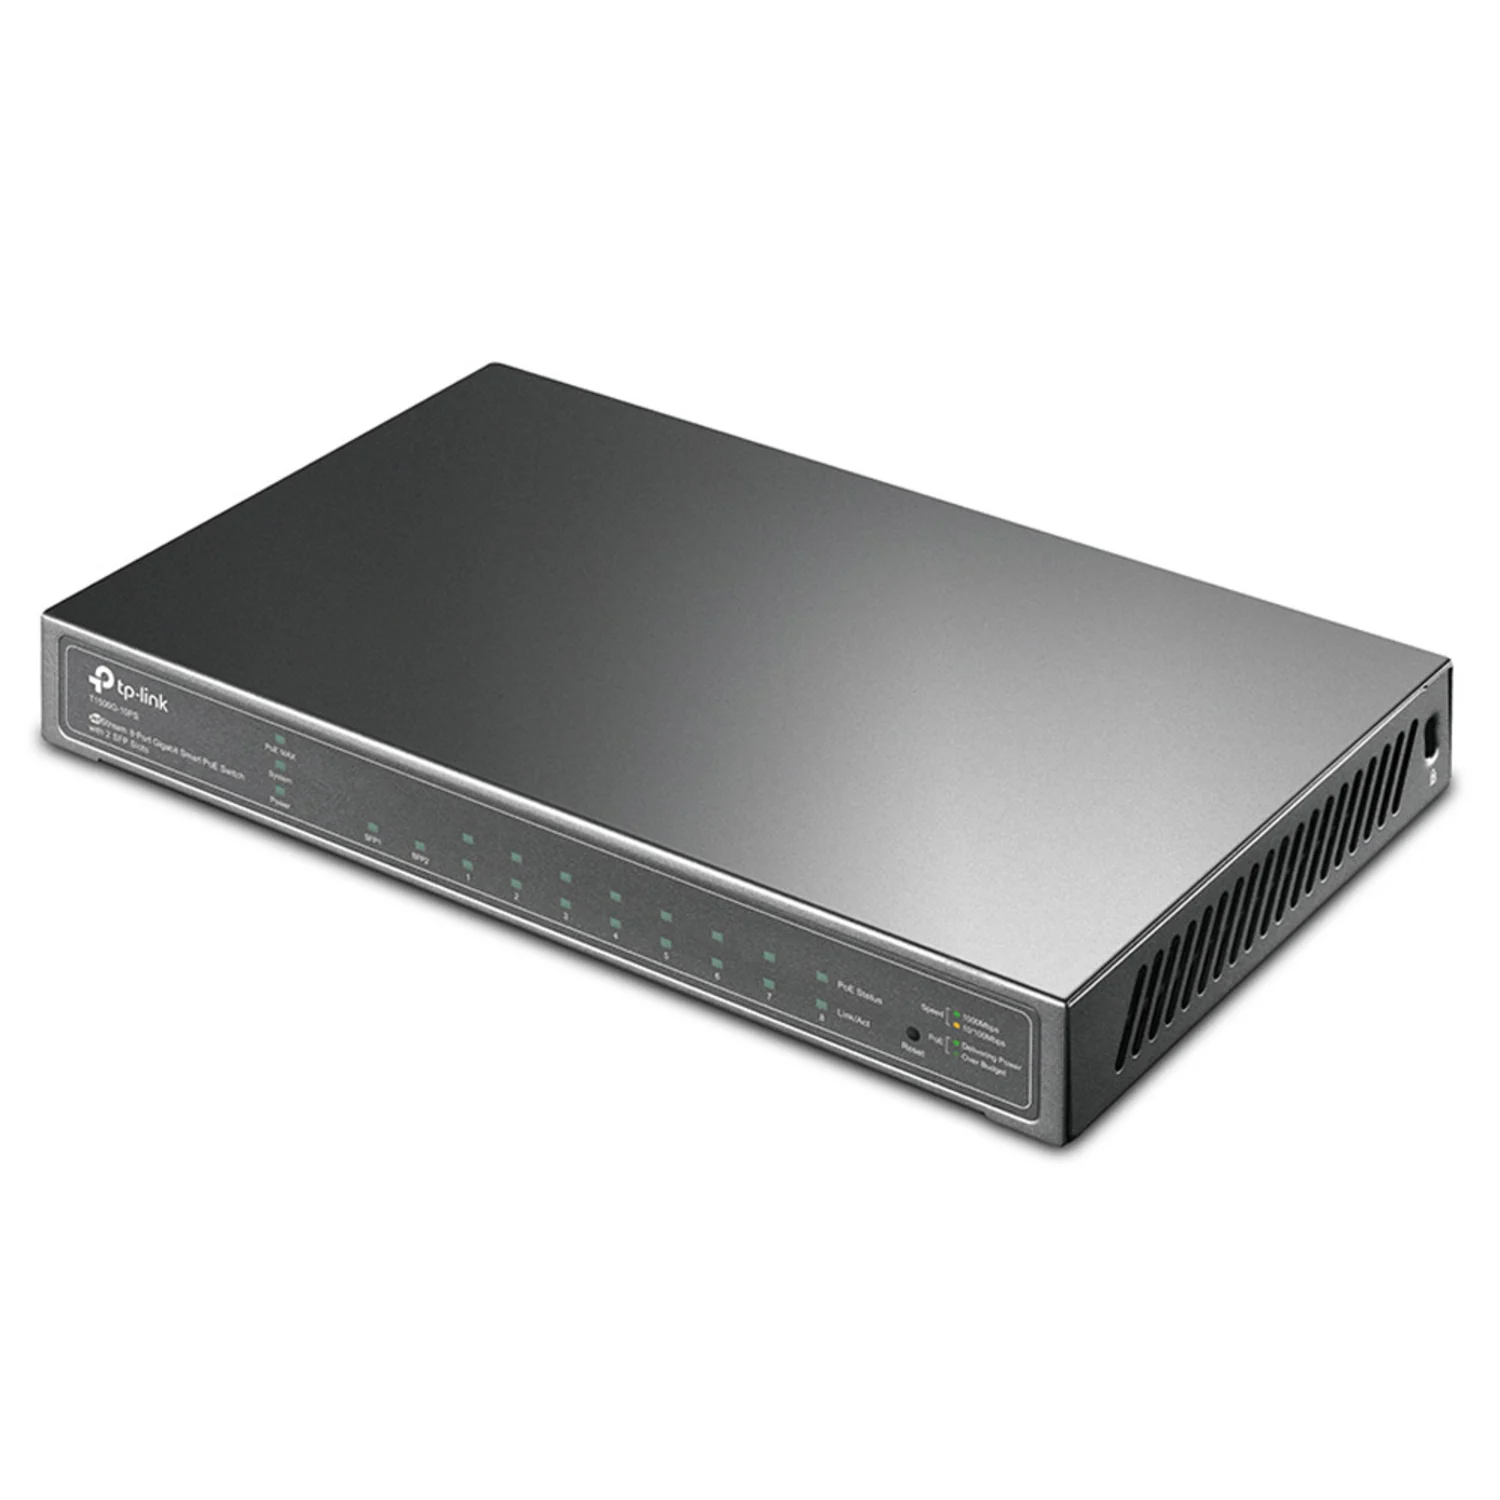 Hub Switch Tp-Link T1500G-10PS / 8 Portas - Cinza (TLSG2210P)